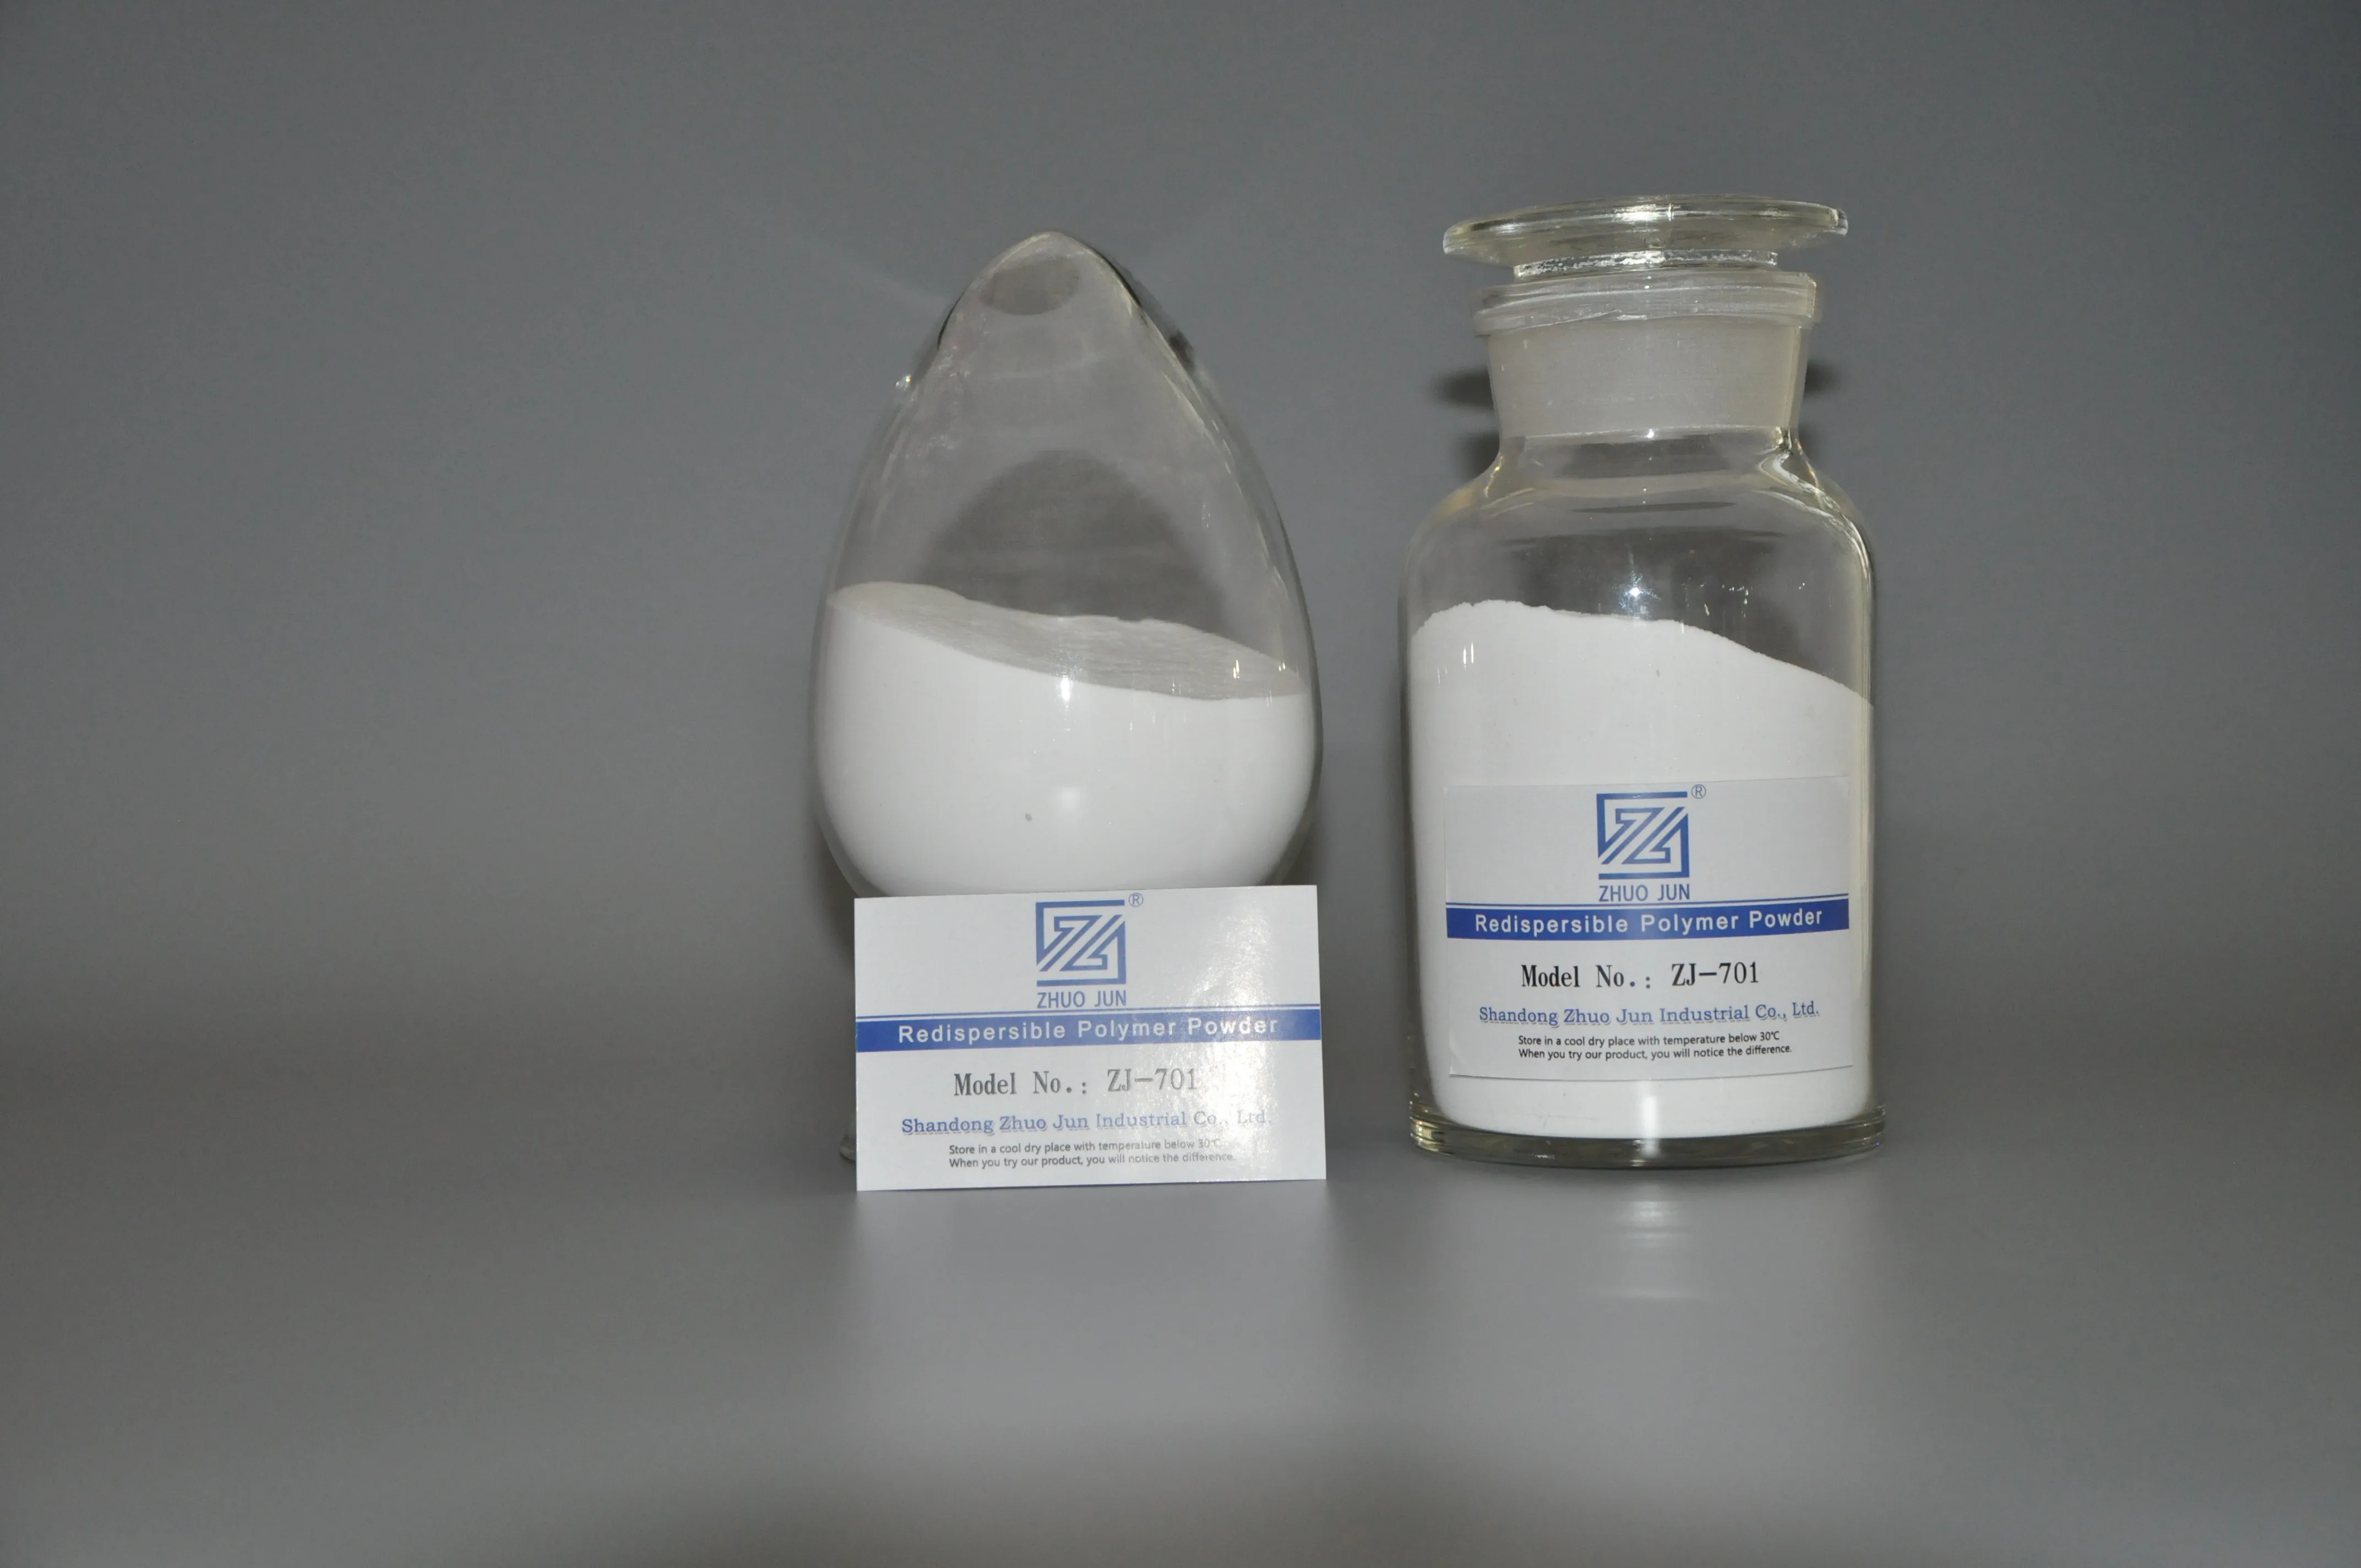 Redispersible Polymer Powder (RDP) ZJ-701